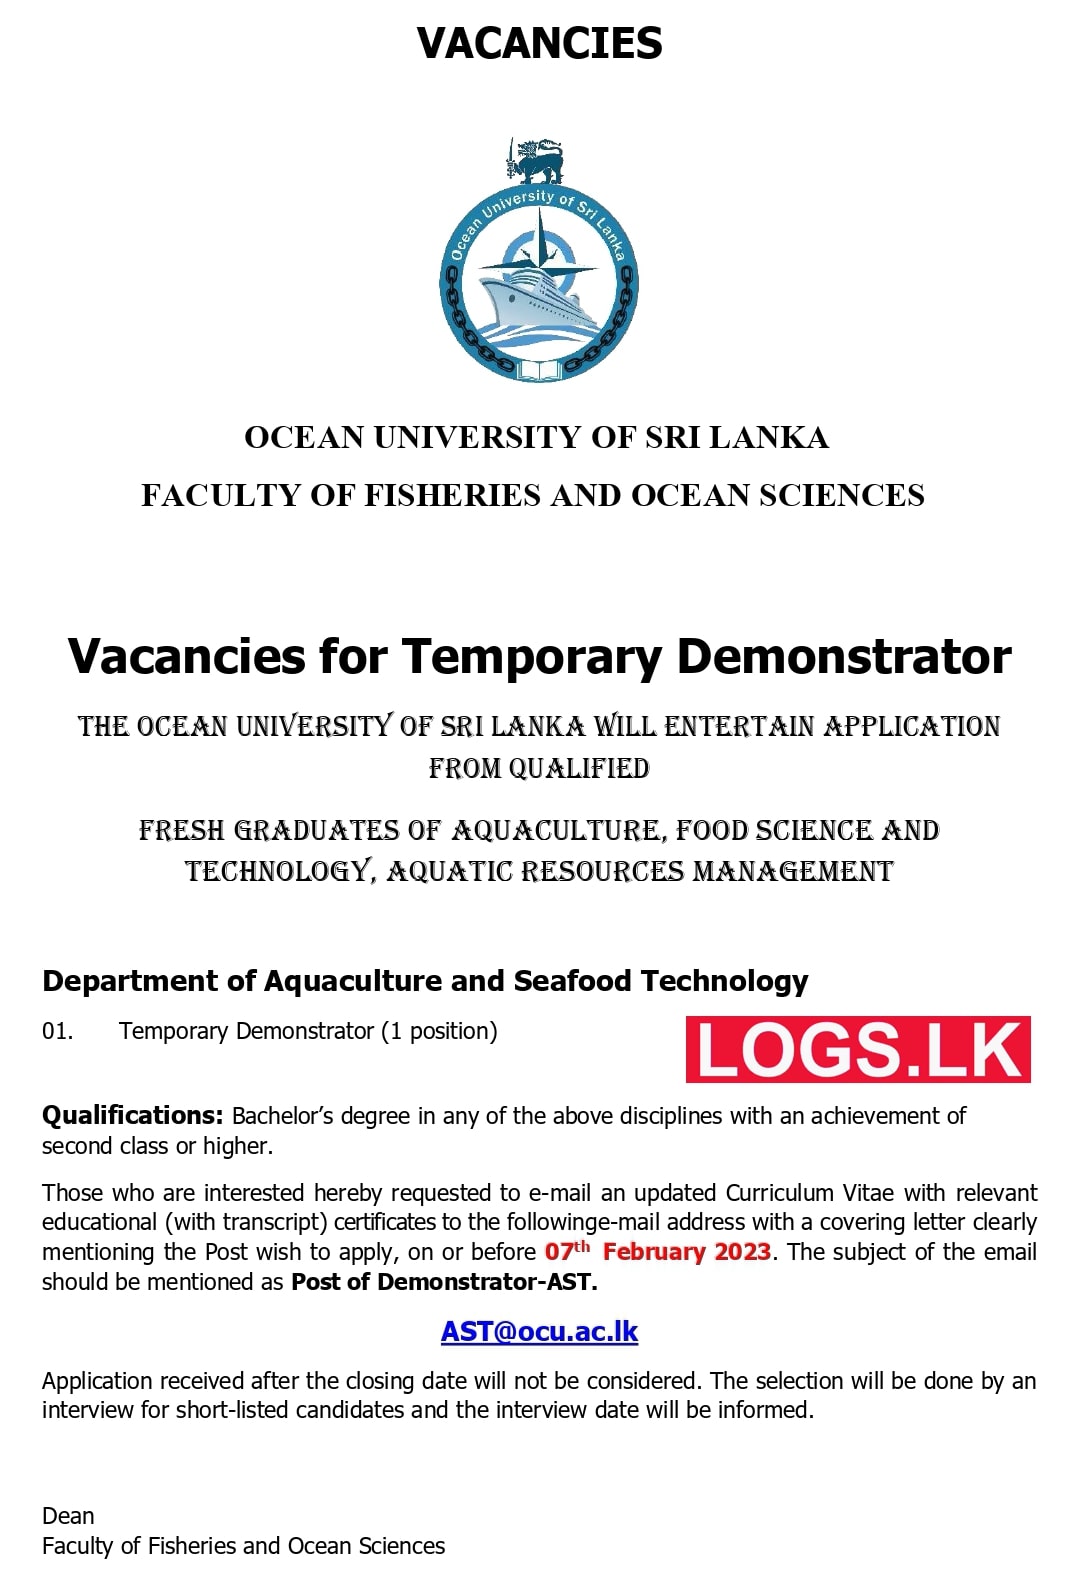 Temporary Demonstrator Vacancy 2023 - Ocean University Job Vacancies 2023 Application Form Download